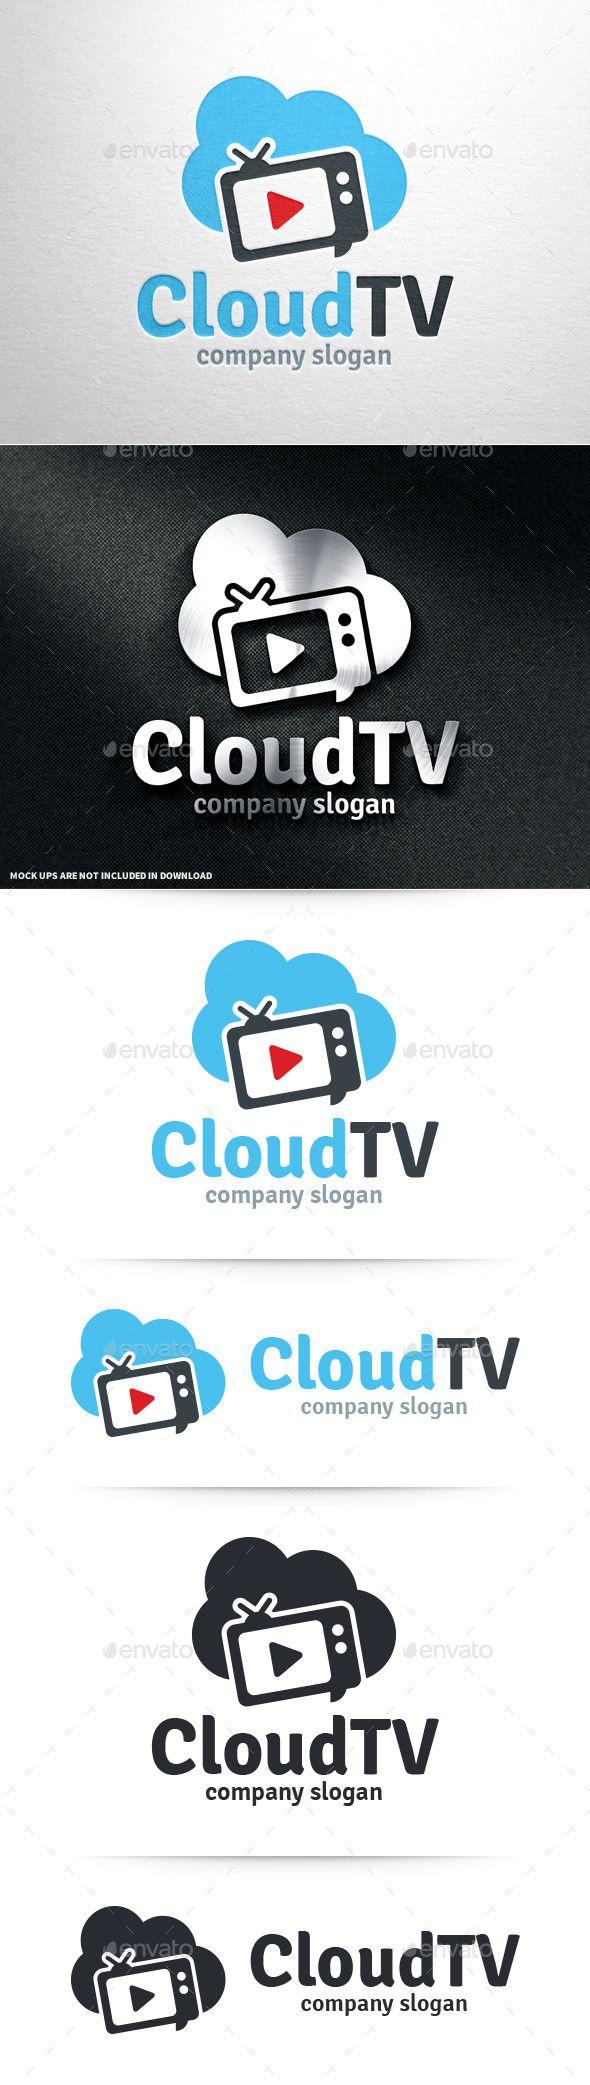 YouTube TV Channel Logo - Cloud TV Logo Template #vector #logo #design #cloud #tv #channel ...